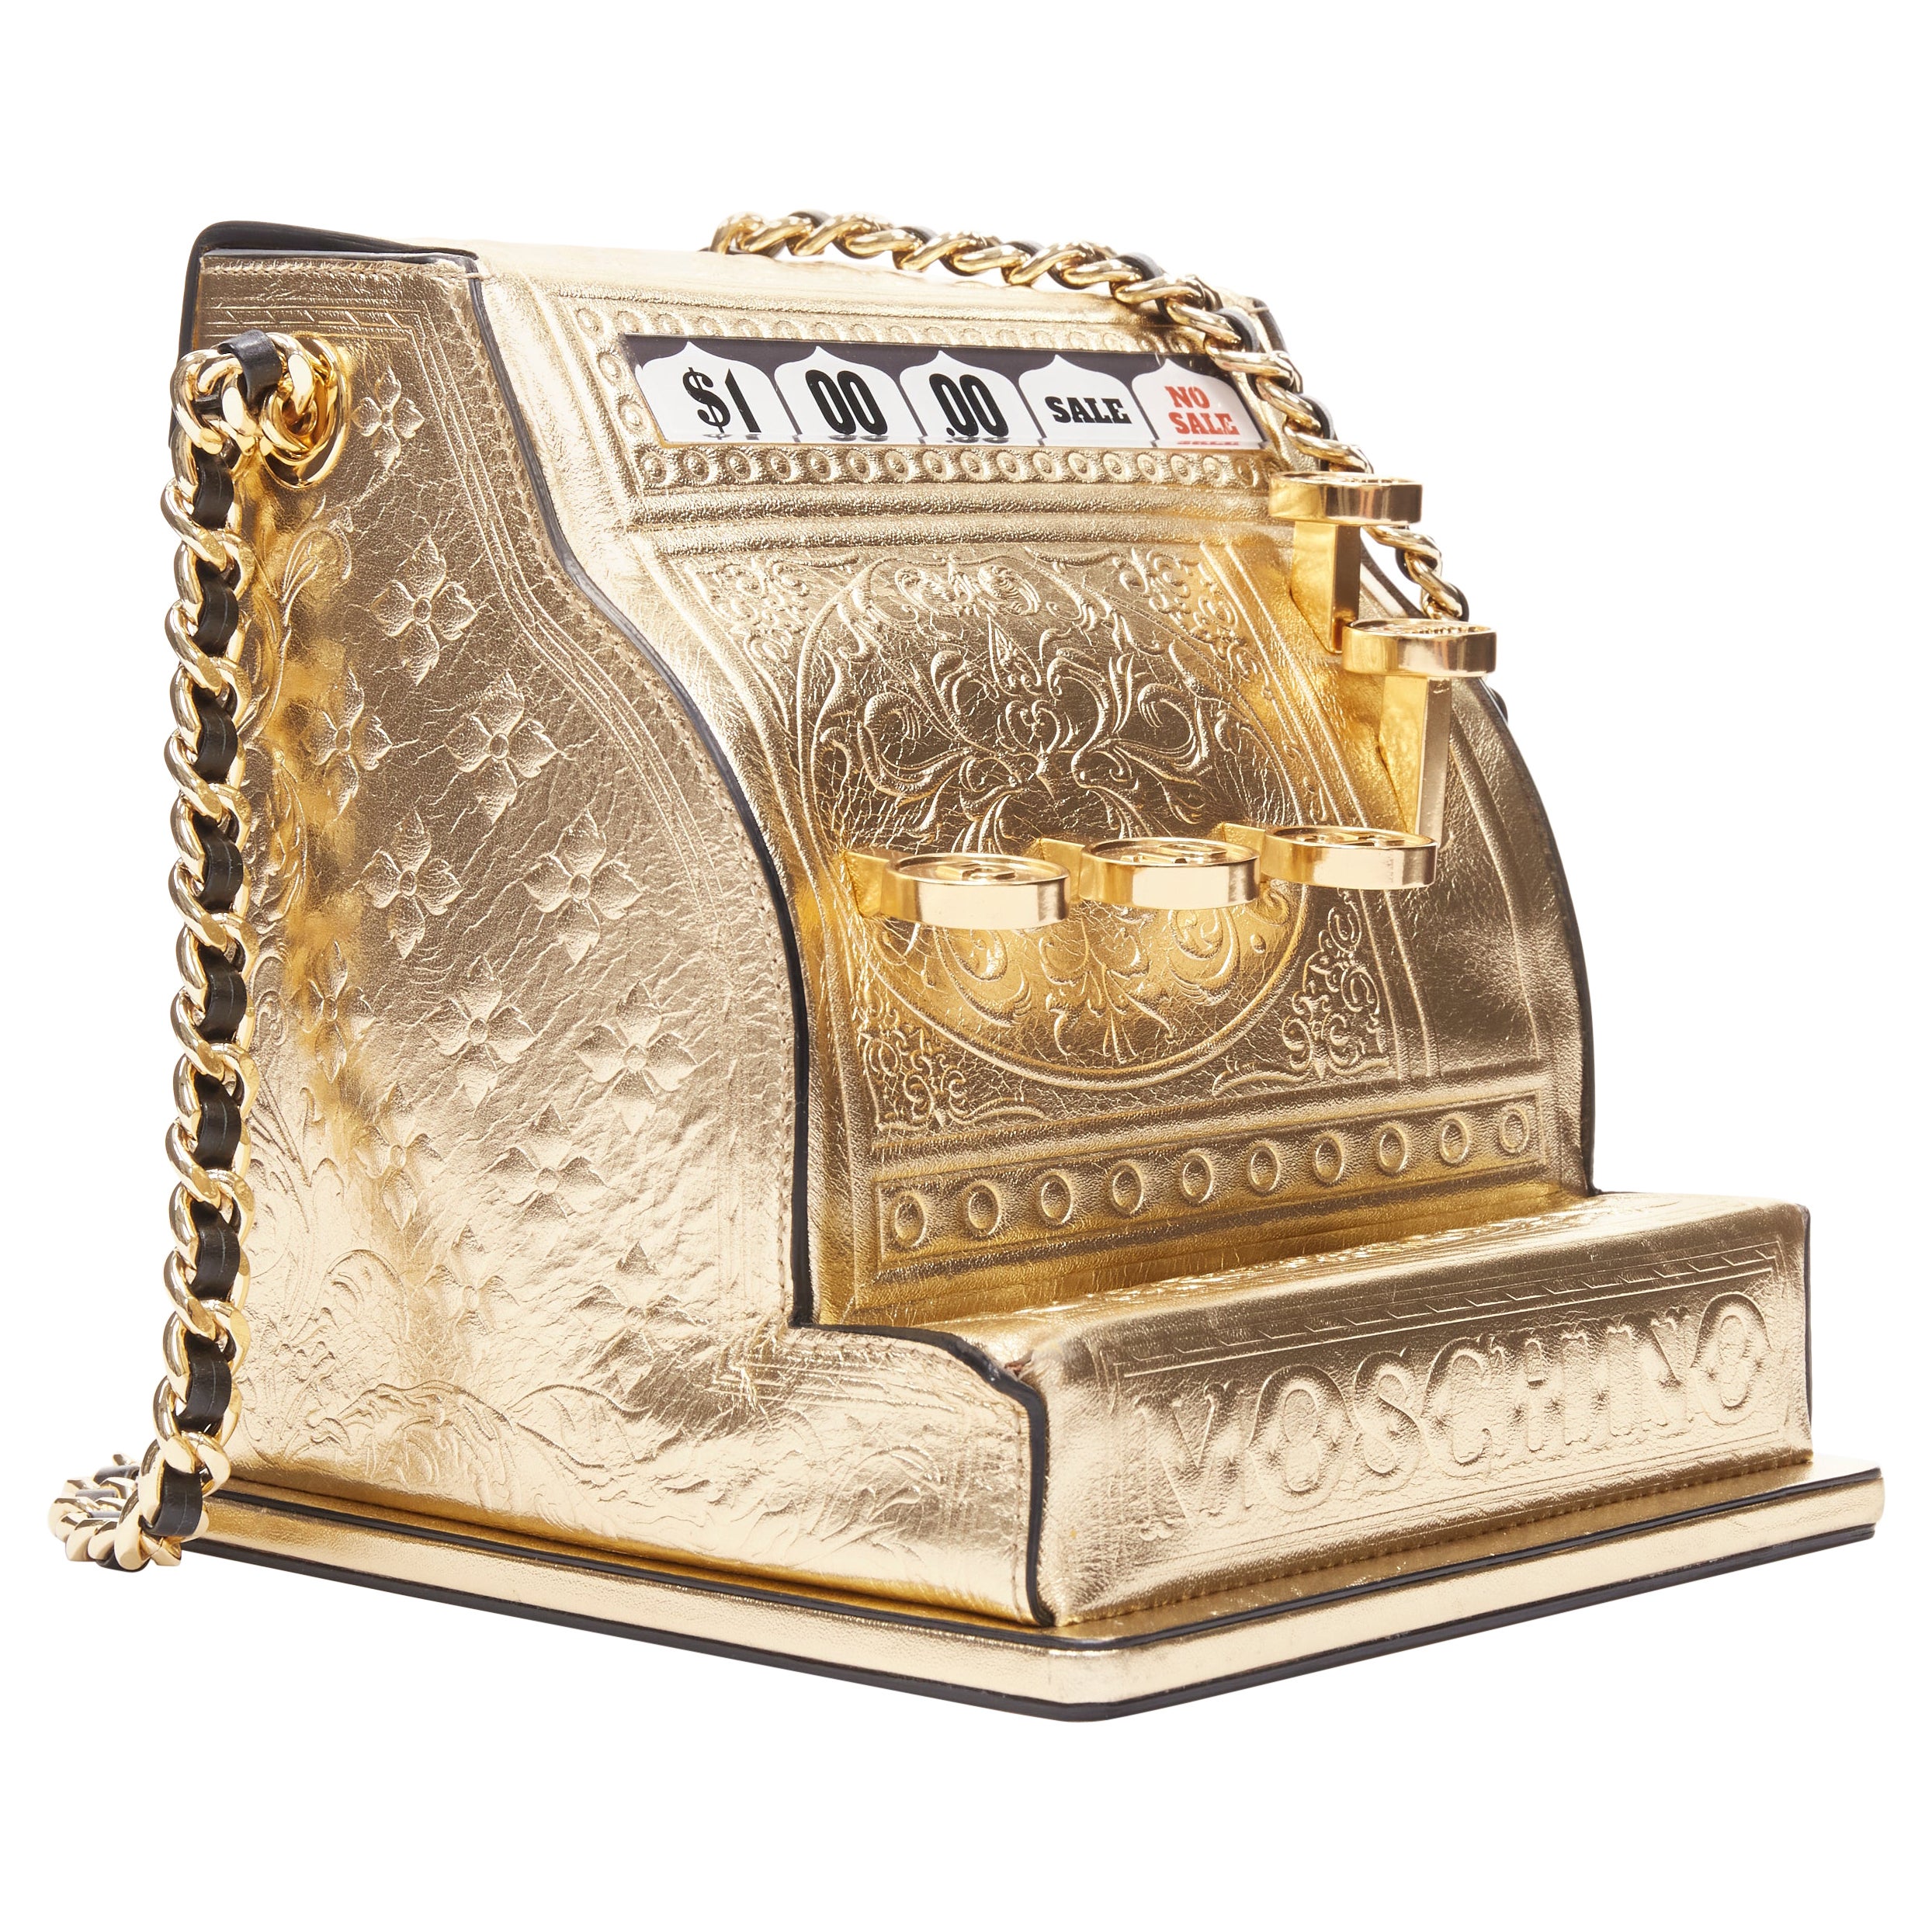 rare MOSCHINO Couture! 2019 Runway gold Cash Register Machine crossbody bag